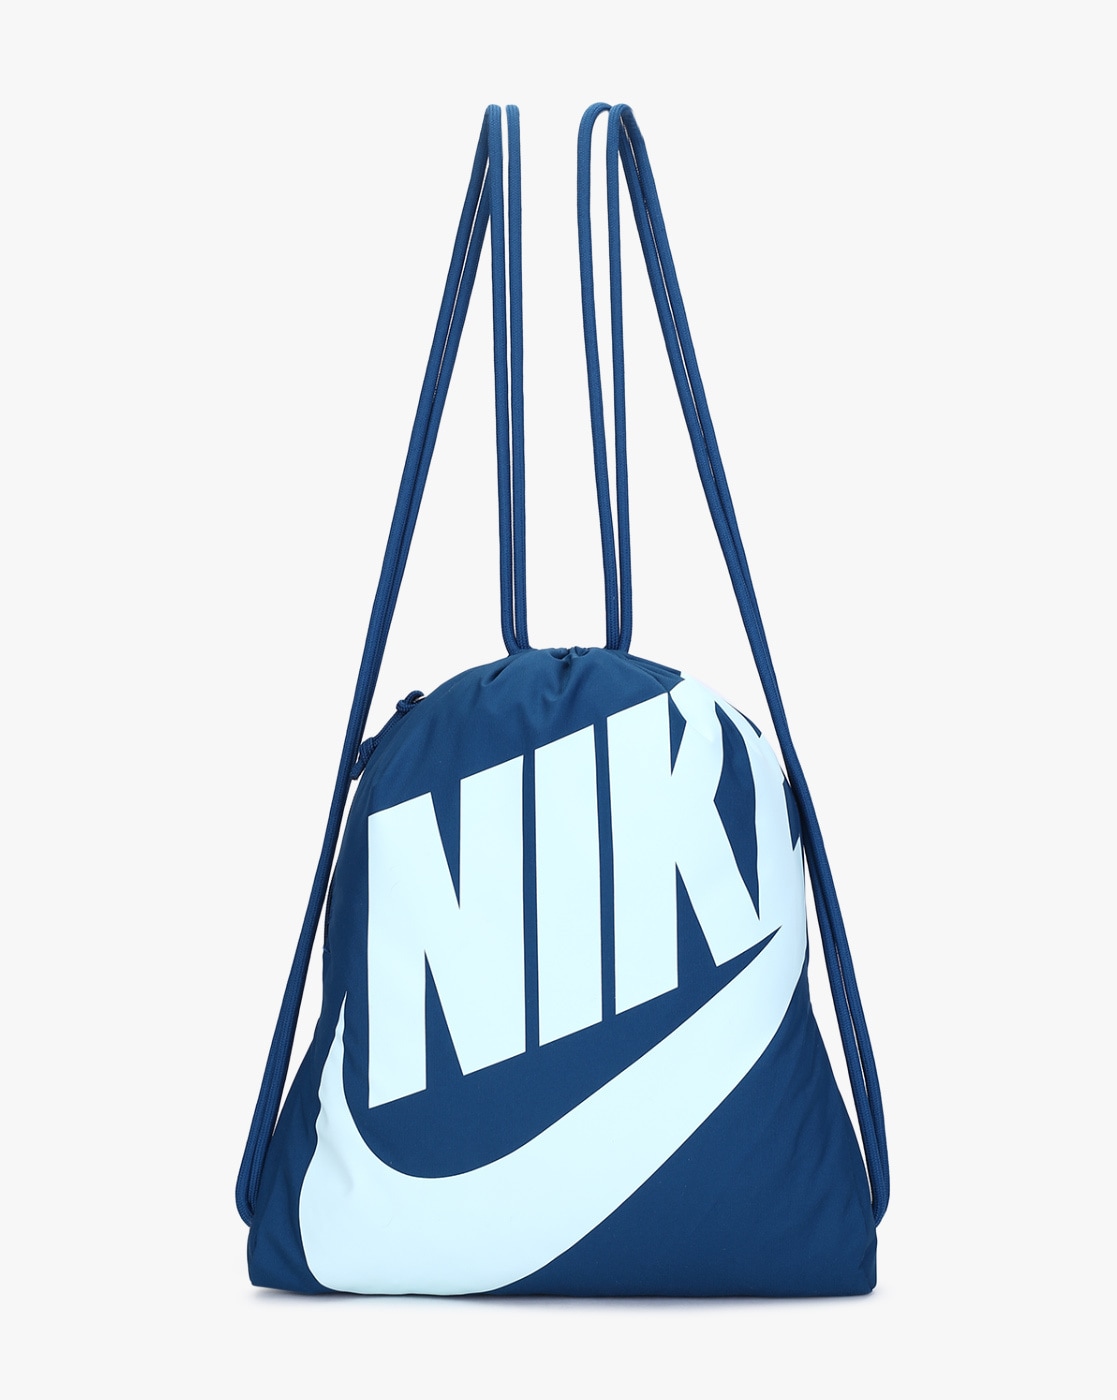 Buy White Sports & Utility Bag for Men by NIKE Online | Ajio.com